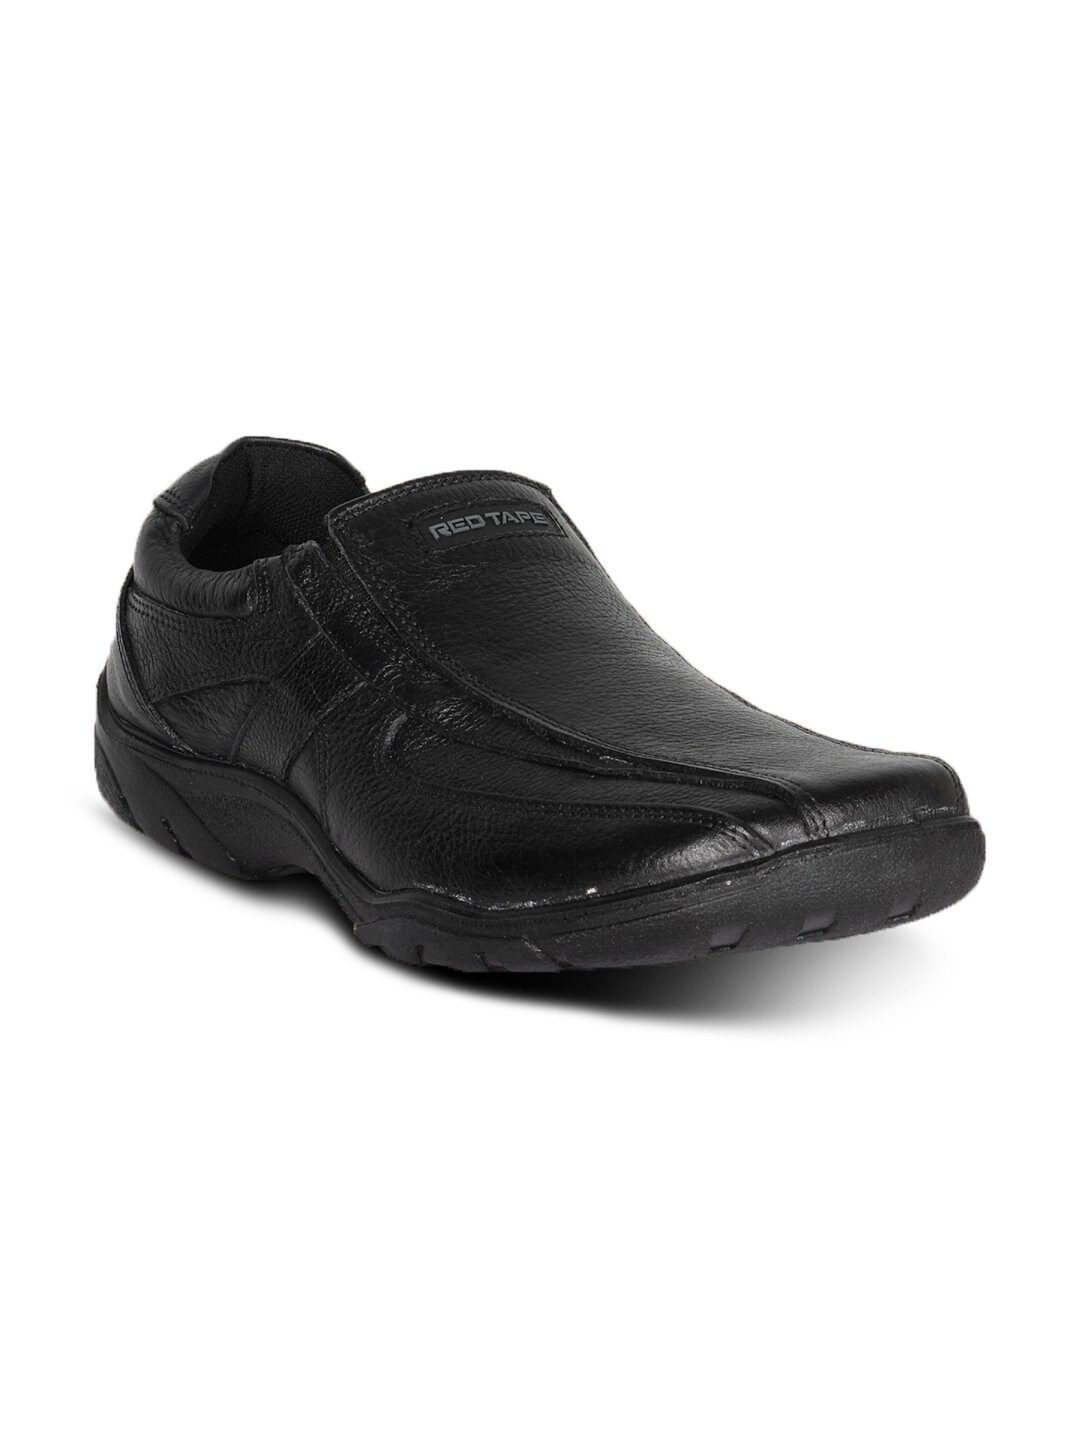 Red Tape Men's Black Leather Formal Shoe